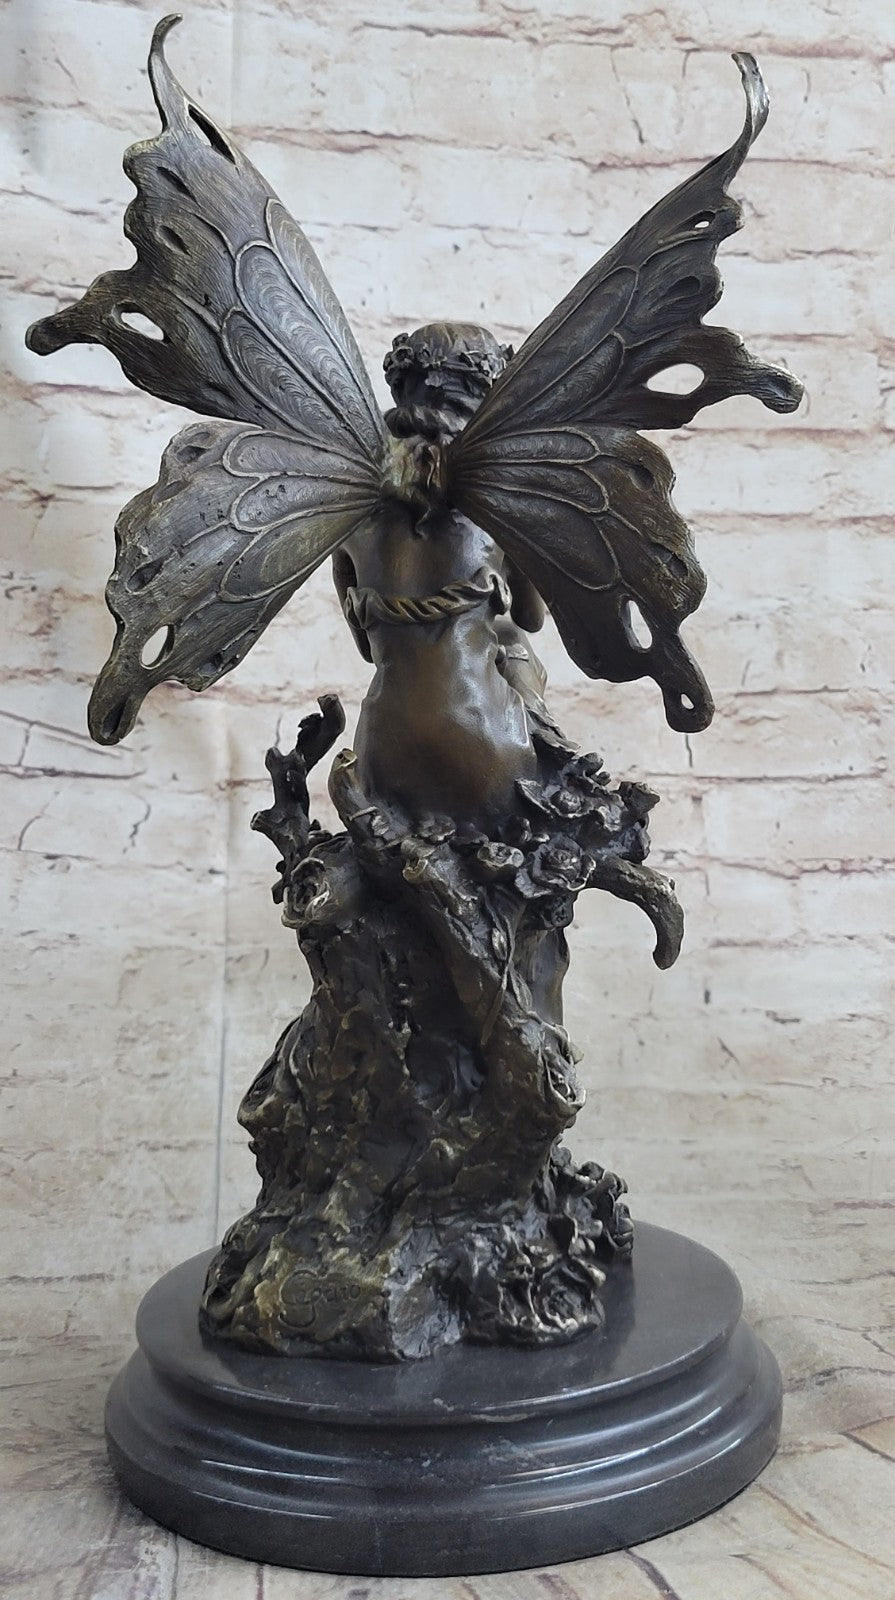 Art Deco Hot Cast fairy Museum Quality Bronze Sculpture Statue Figurine Decor